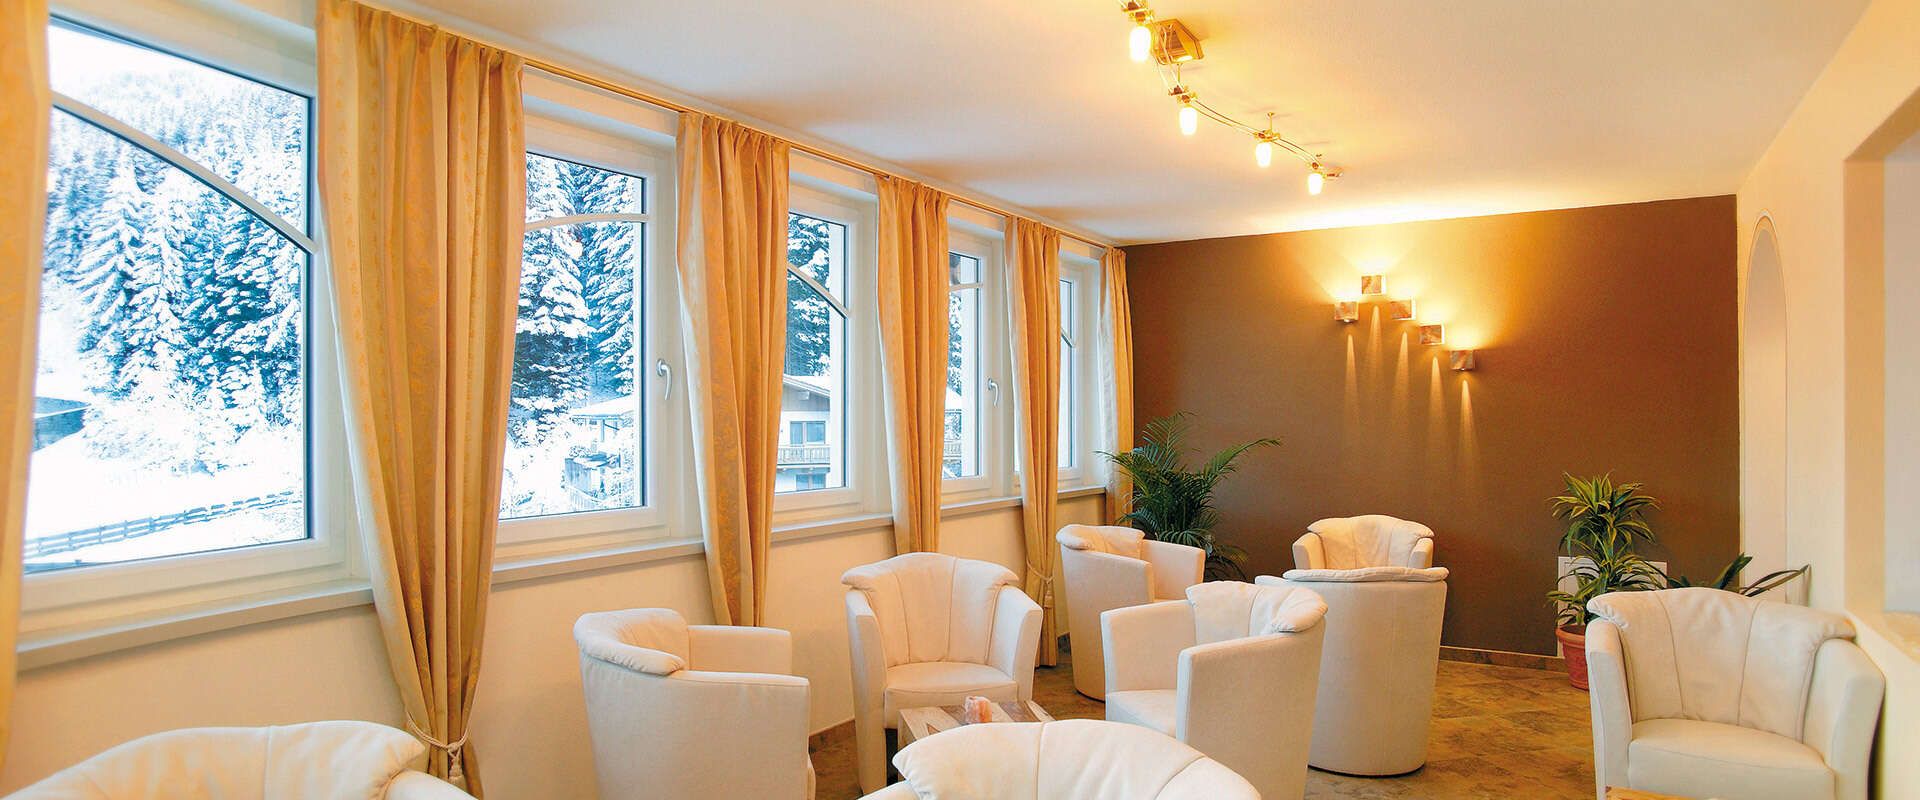 Lounge in the Hotel Alpenherz in Gerlos in the Zillertal